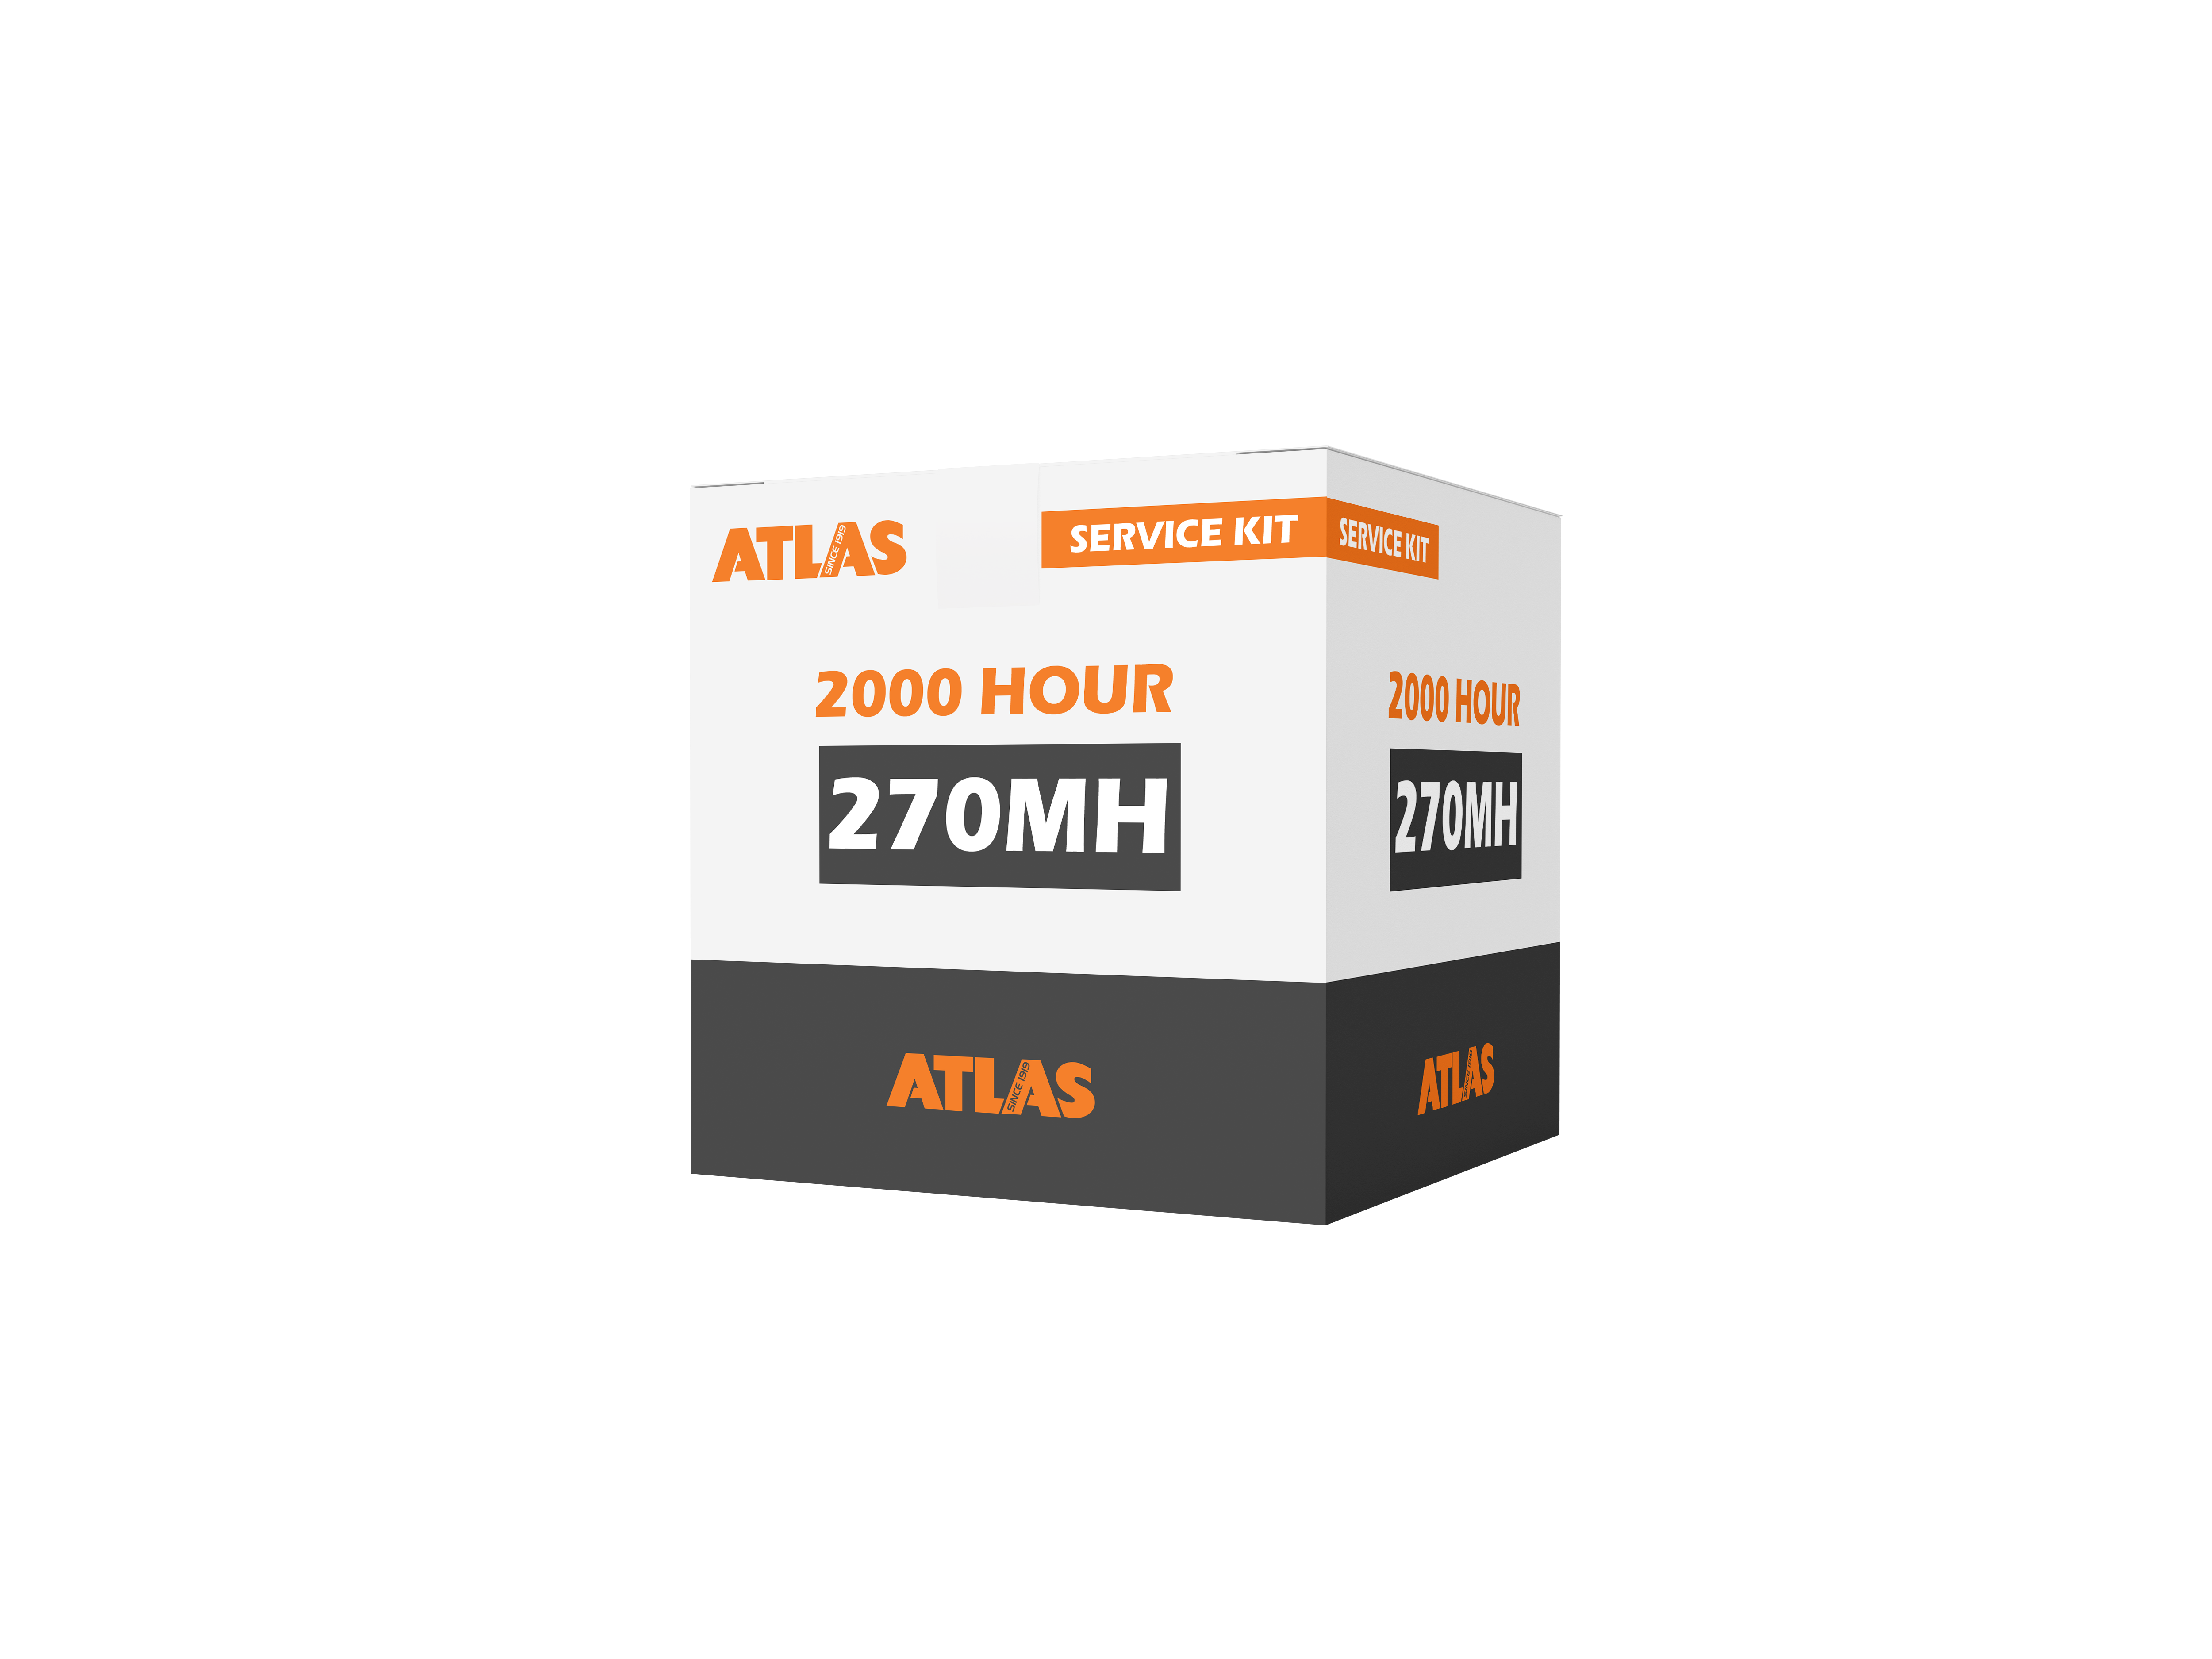 Atlas 270MH 2000 Hour Service Kit (Tier 3 Engine)